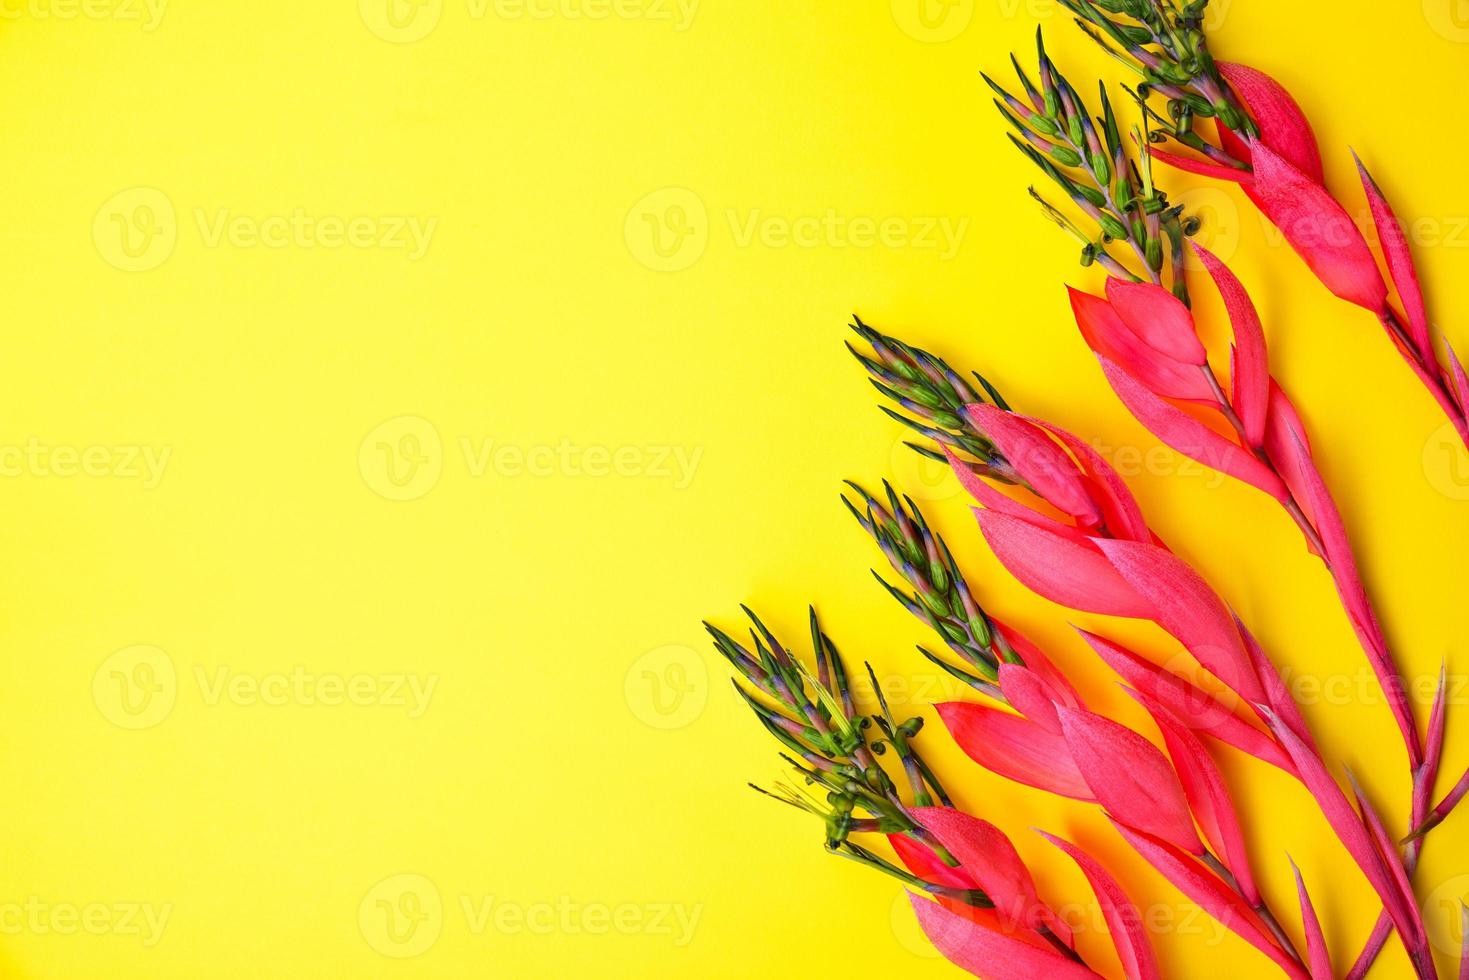 rosa blomma av billbergia på en gul bakgrund foto